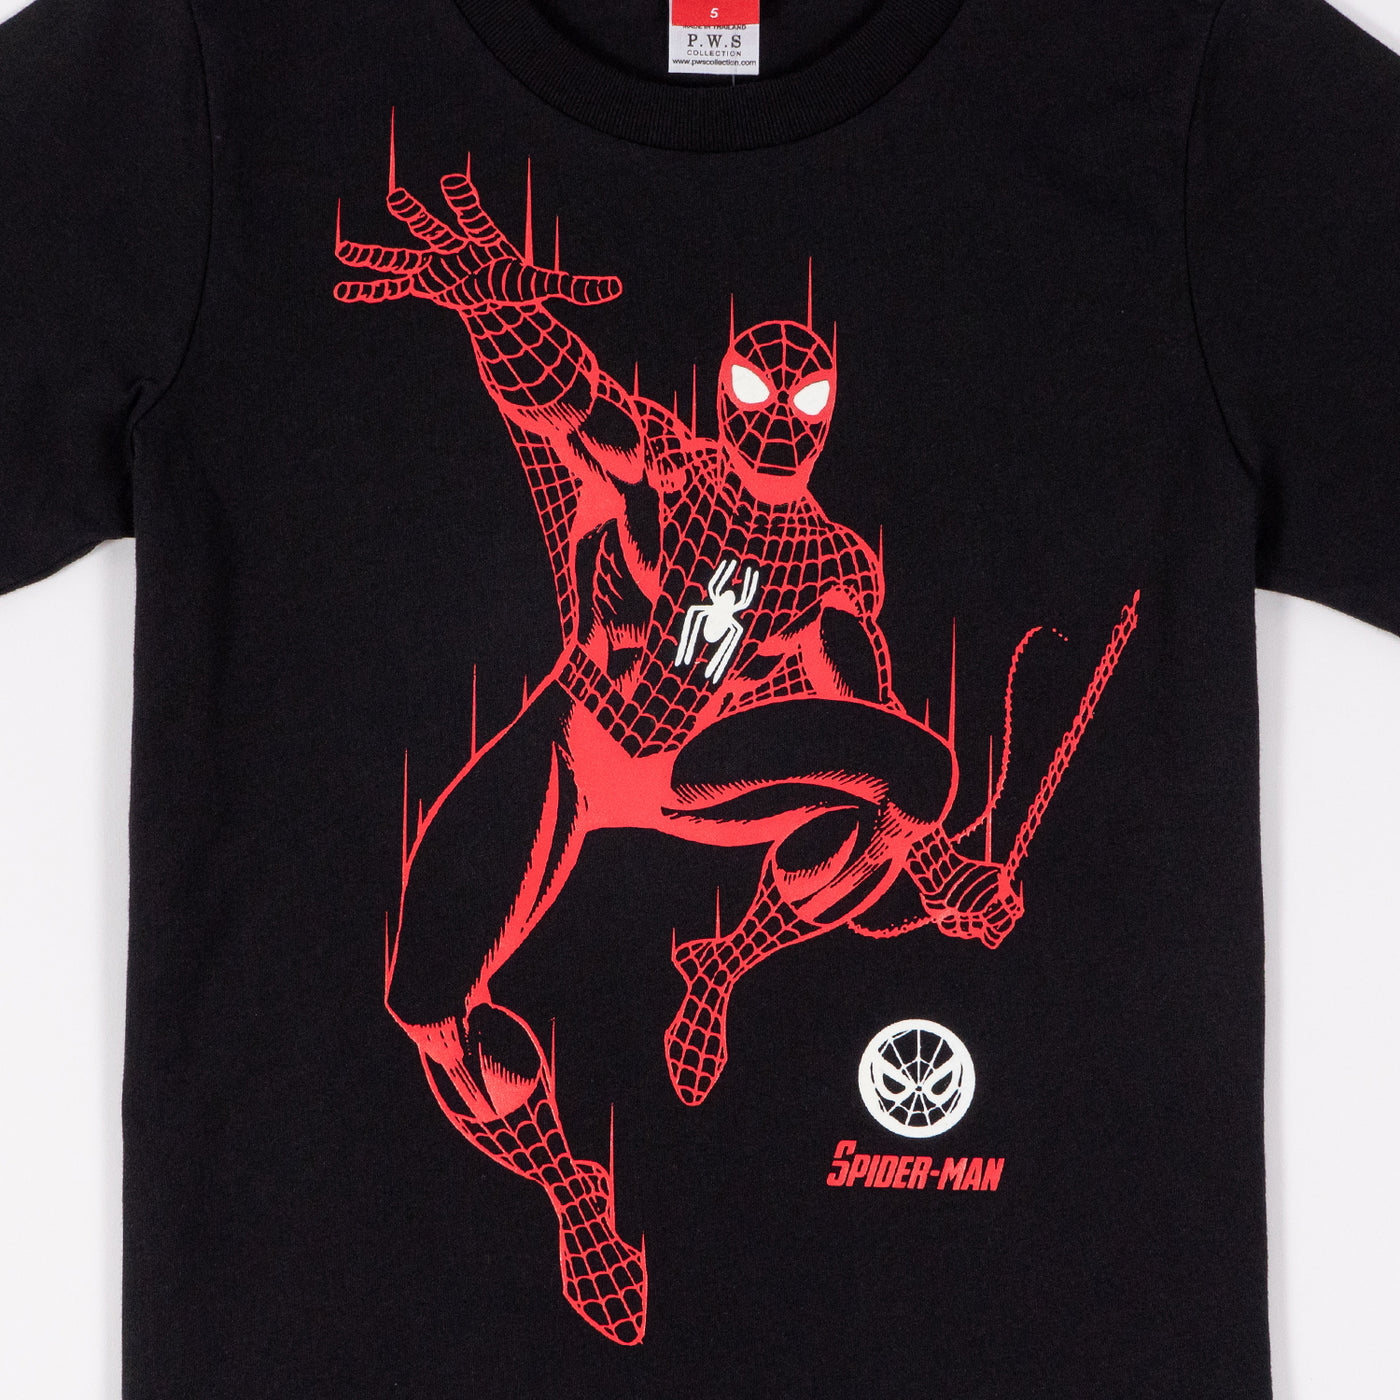 Marvel Boy Glow In The Dark Spider-Man T-Shirt - เสื้อยืดเด็กมาร์เวล เทคนิคเรืองแสงในที่มืดลายสไปเดอร์แมน